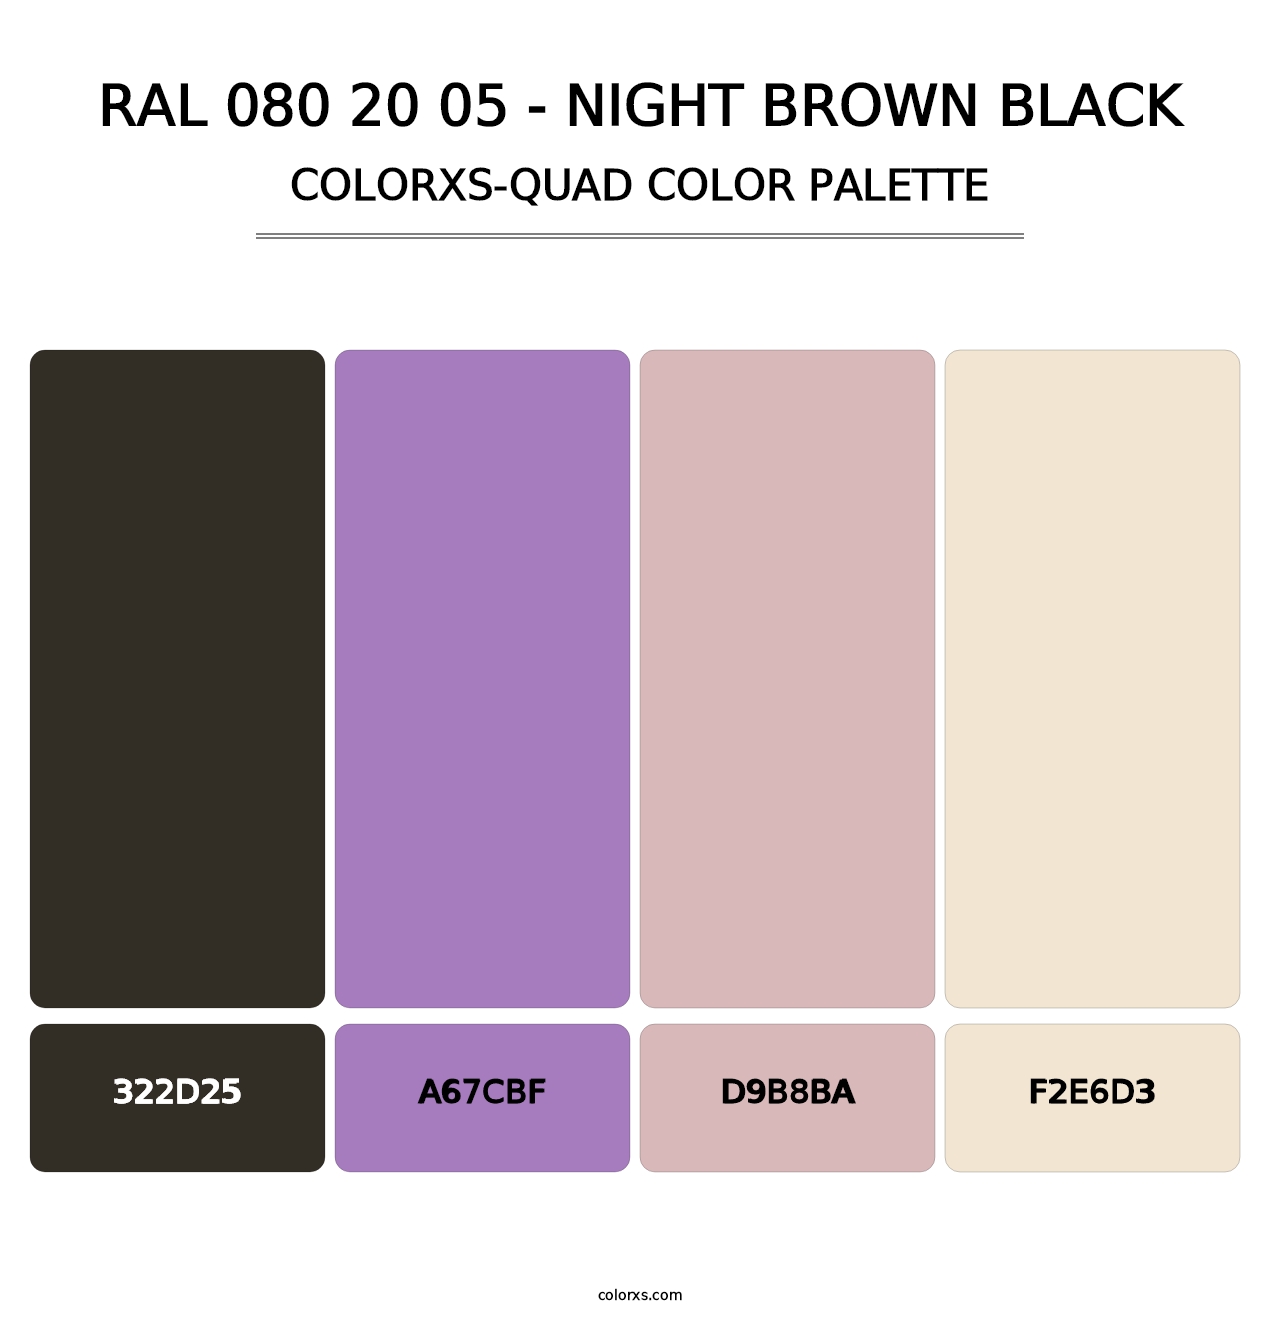 RAL 080 20 05 - Night Brown Black - Colorxs Quad Palette